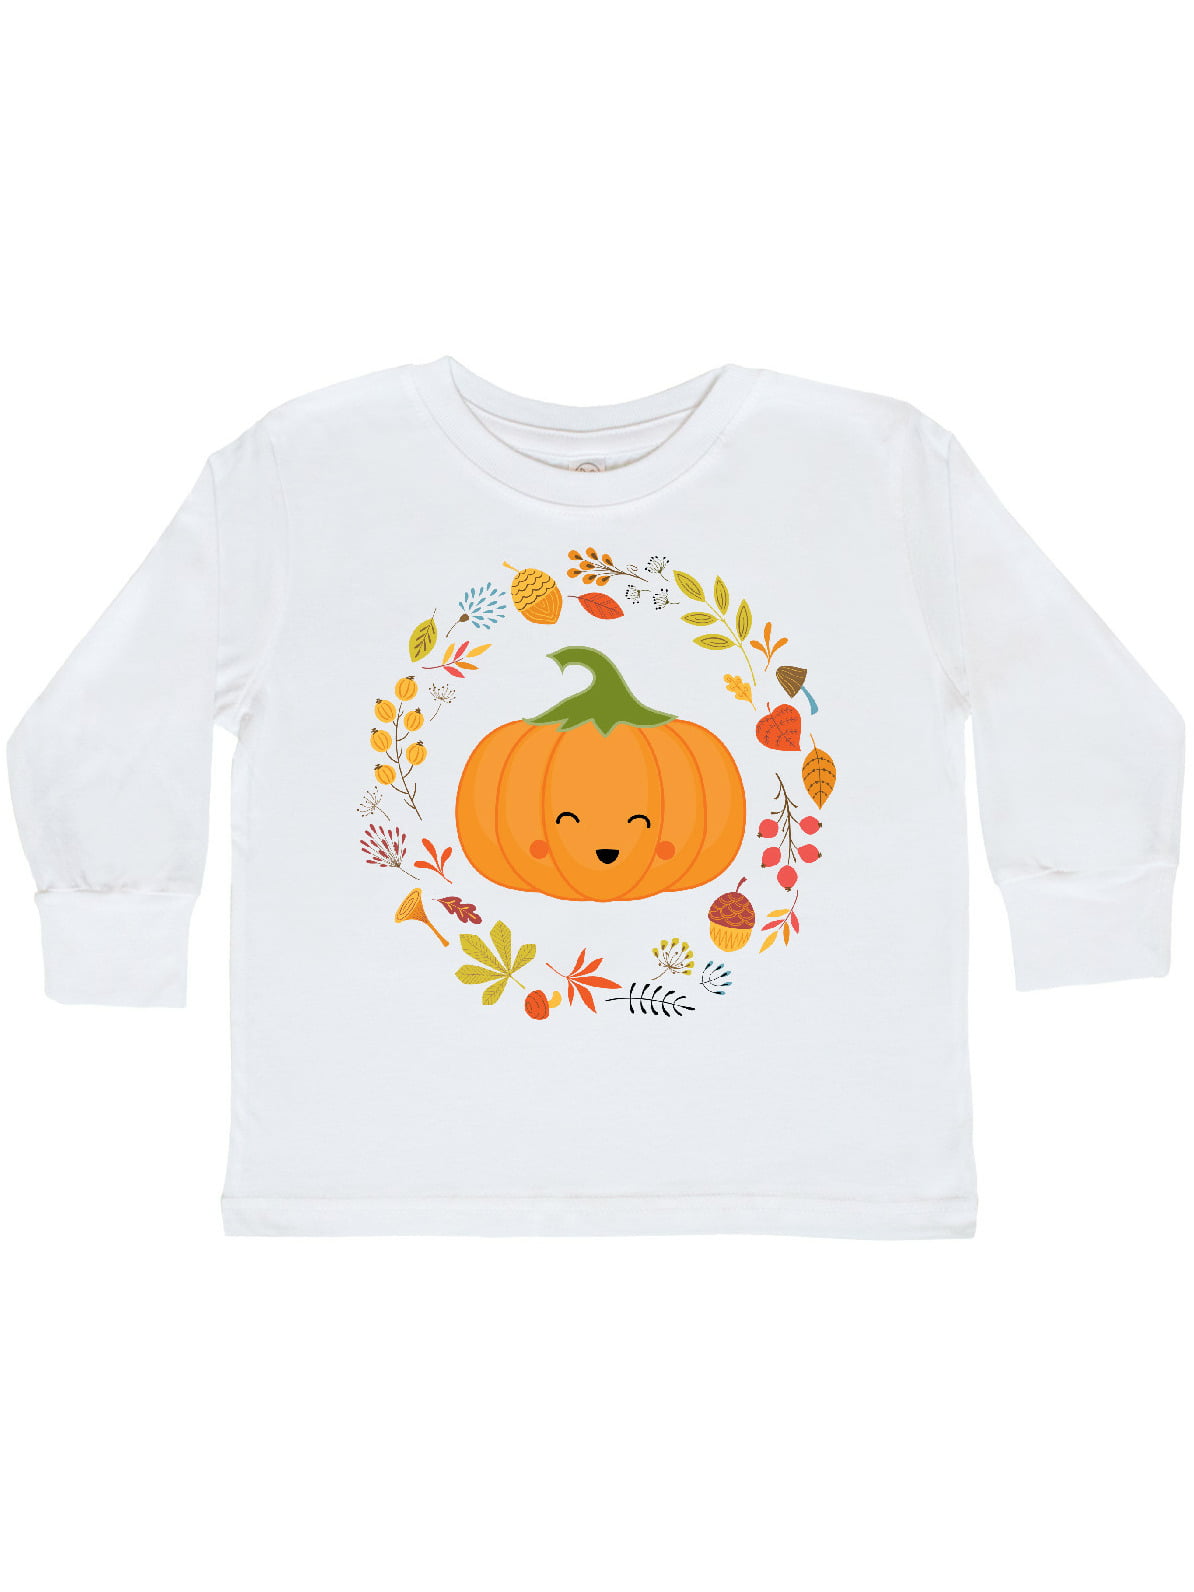 Fall Season Pumpkin shirt Thanksgiving holiday t-shirt Happy Fall  t-shirt